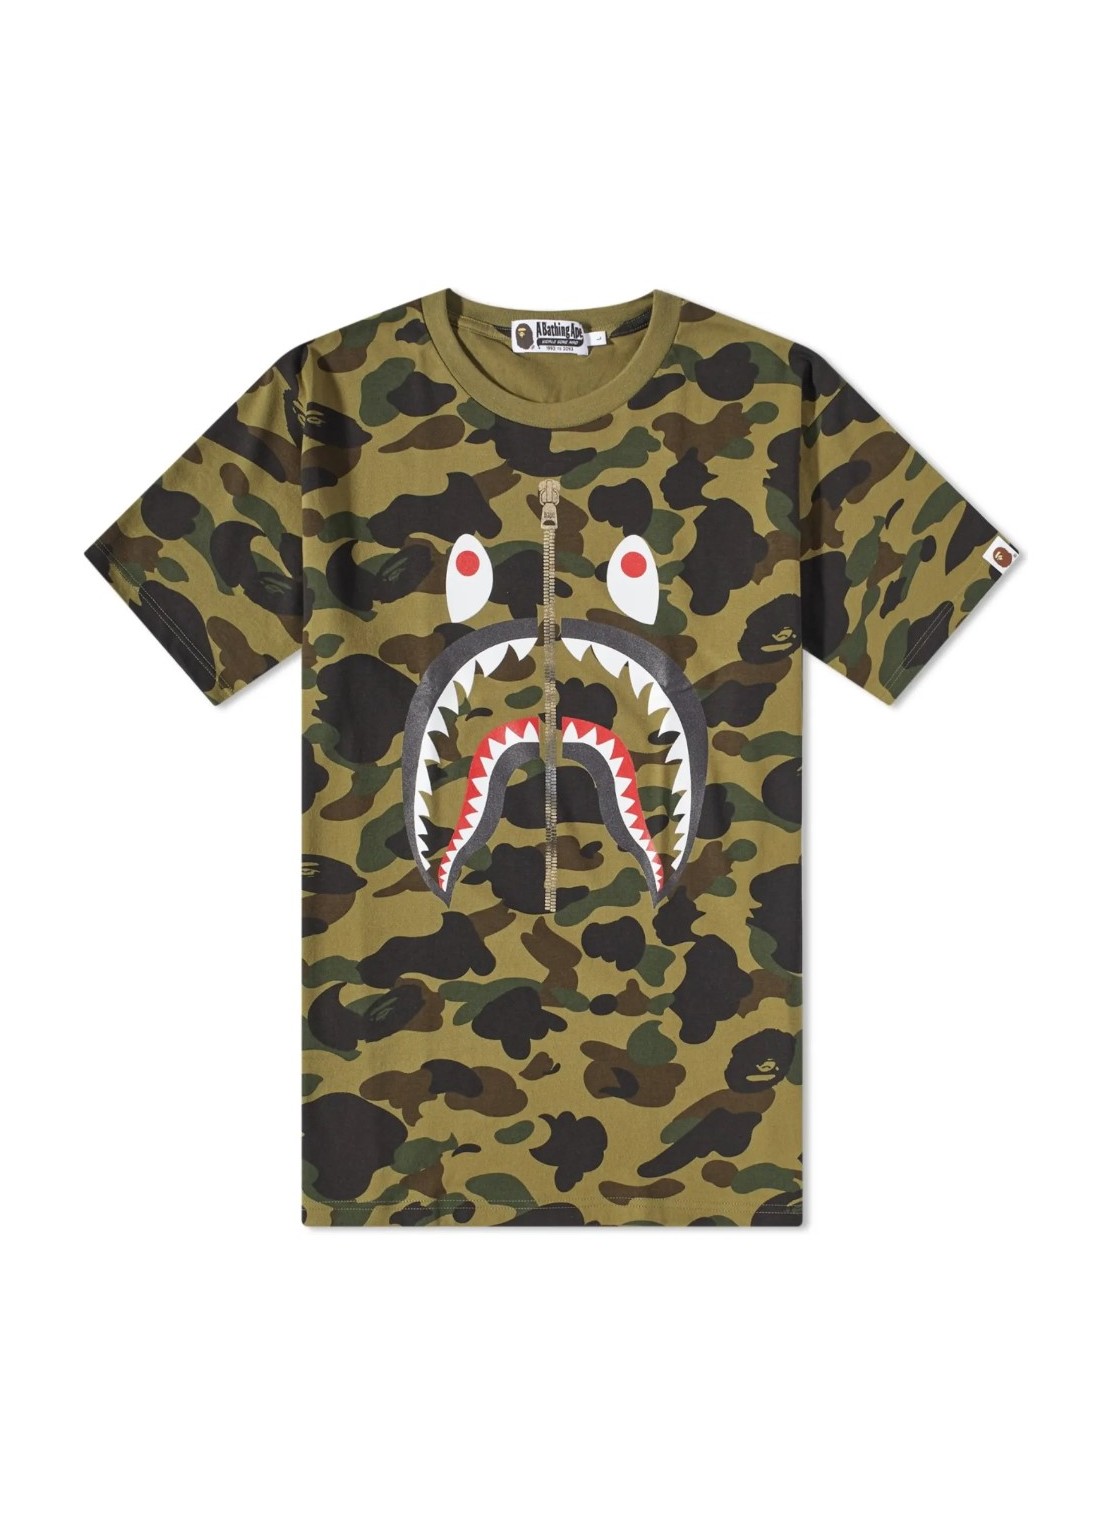 Camiseta bape t-shirt man 1st camo shark tee mens 001csj201002m grn talla M
 